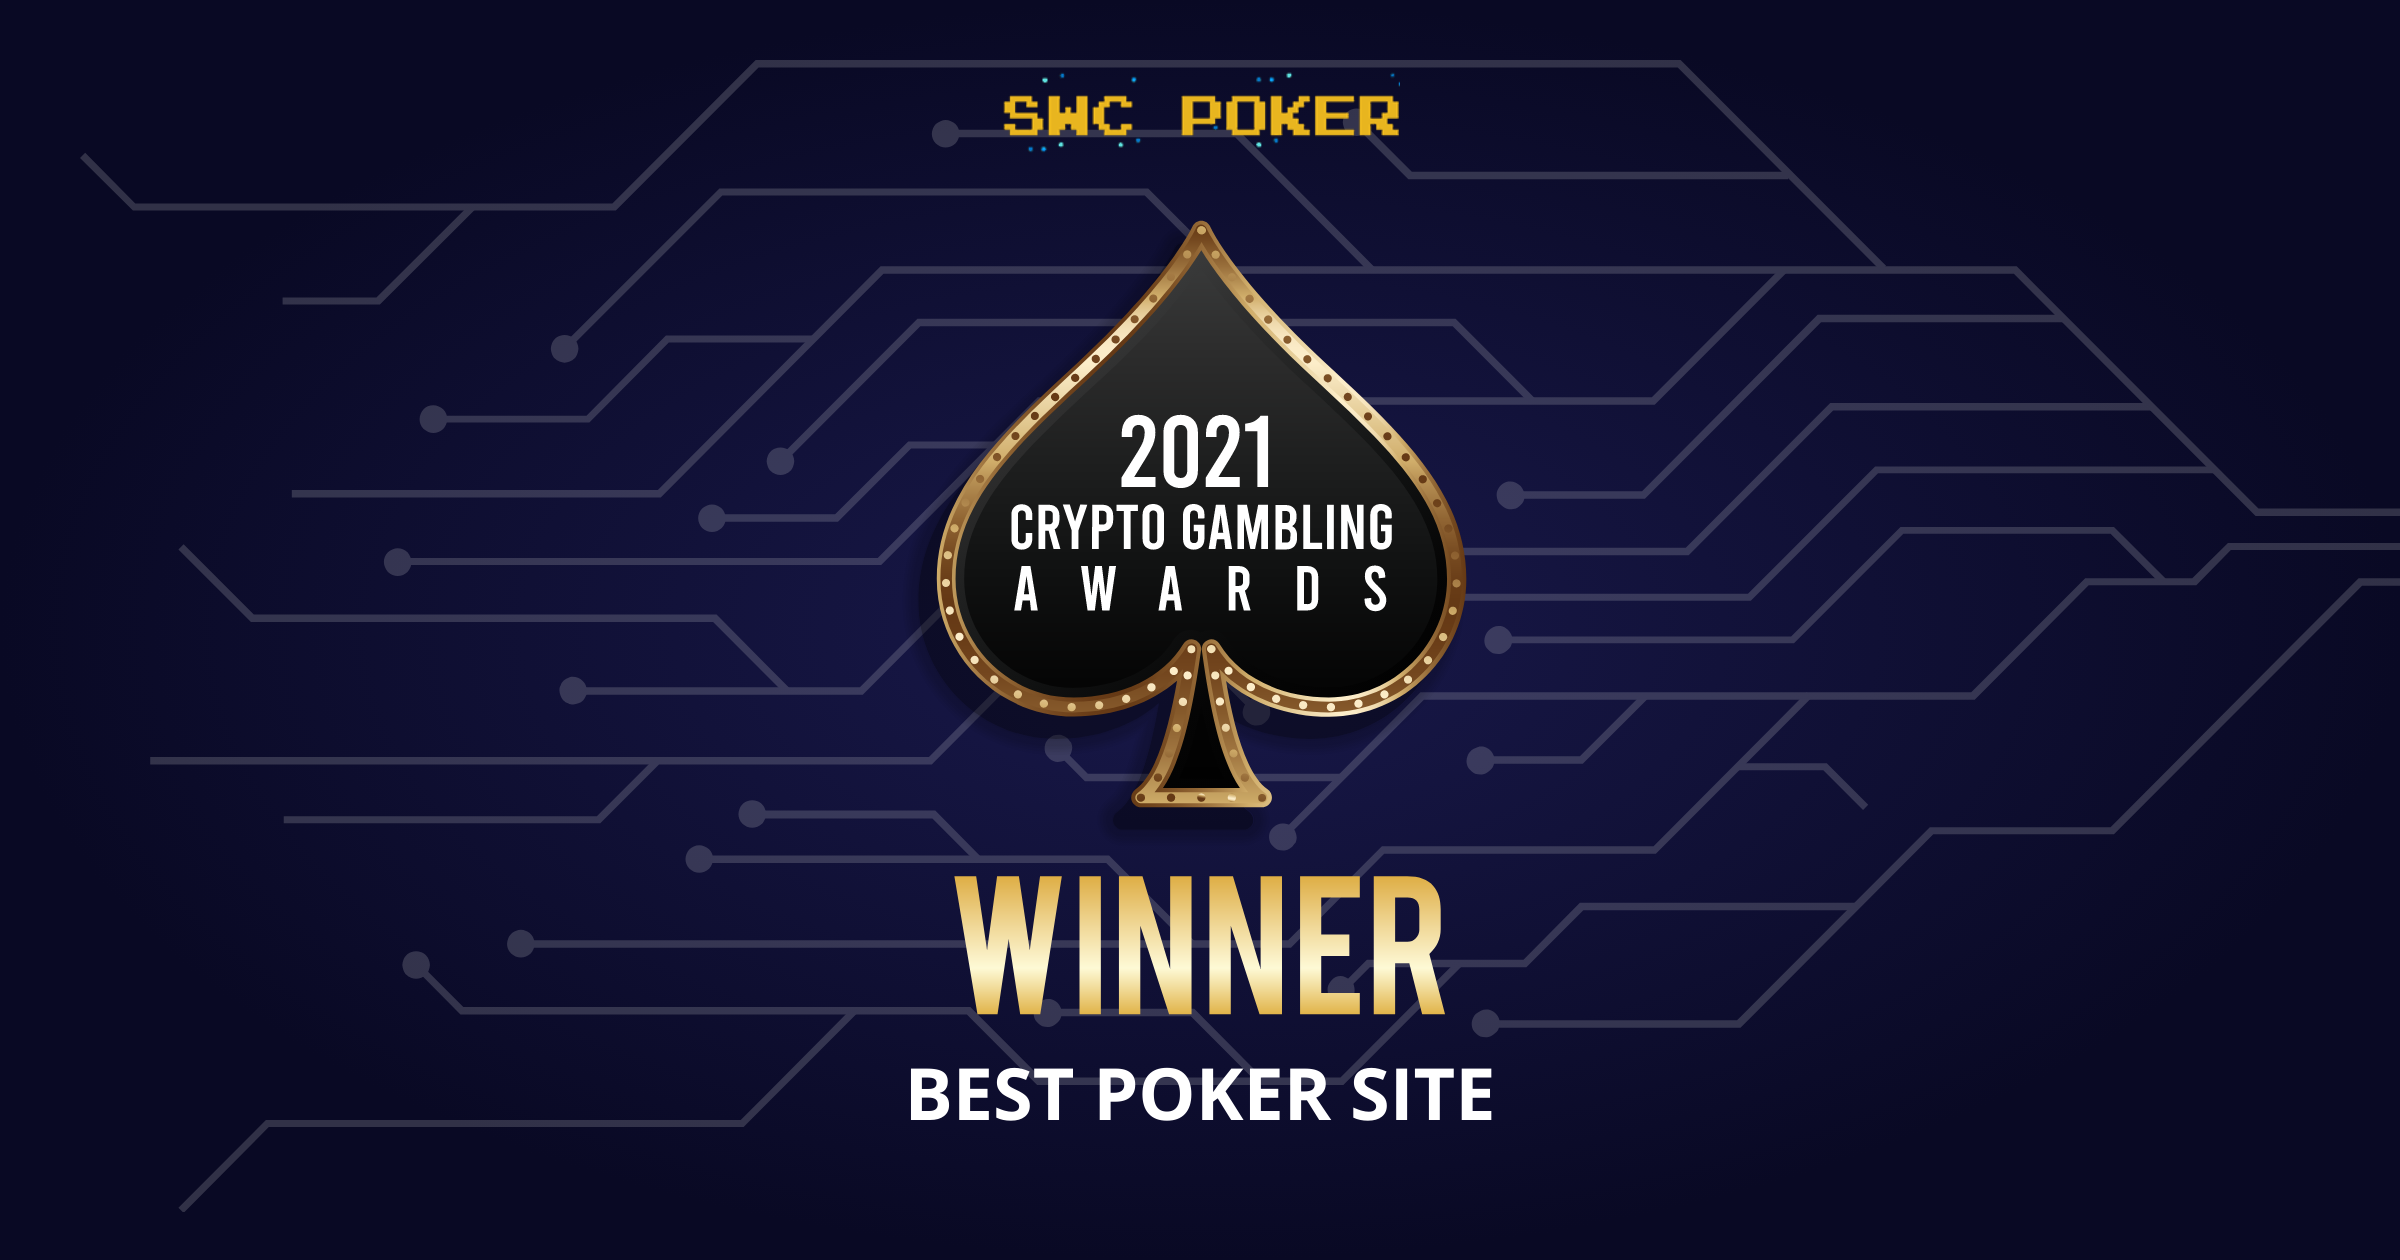 Crypto Gambling Awards won by SwC Poker